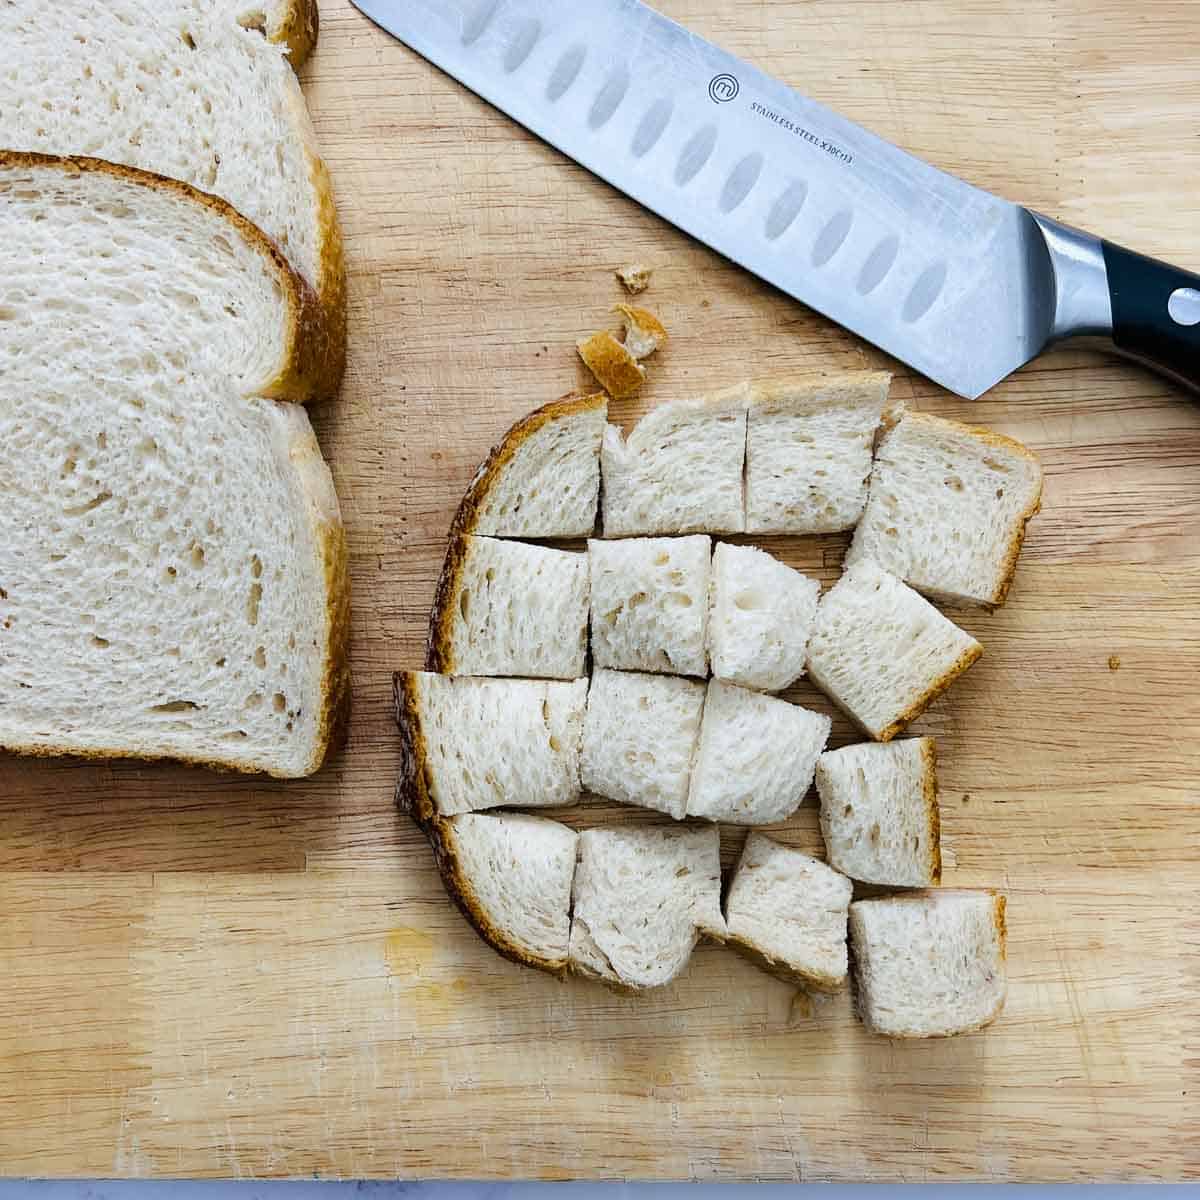 Cut bread slices on a wooden cutting board.